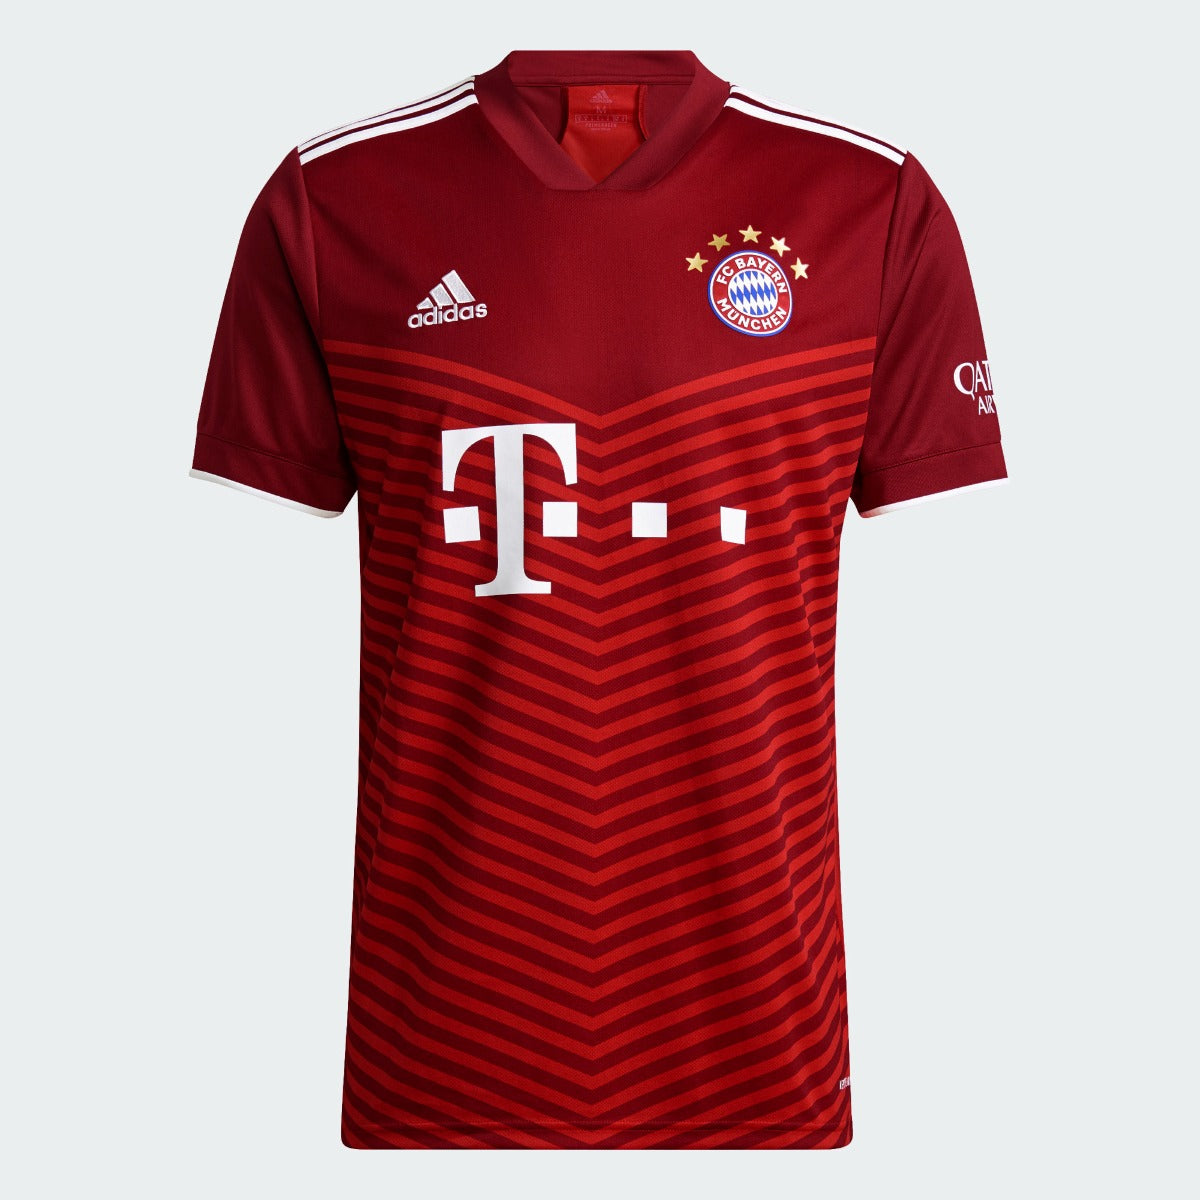 Adidas 2021-22 Bayern Munich Home Jersey - True Red (Front)